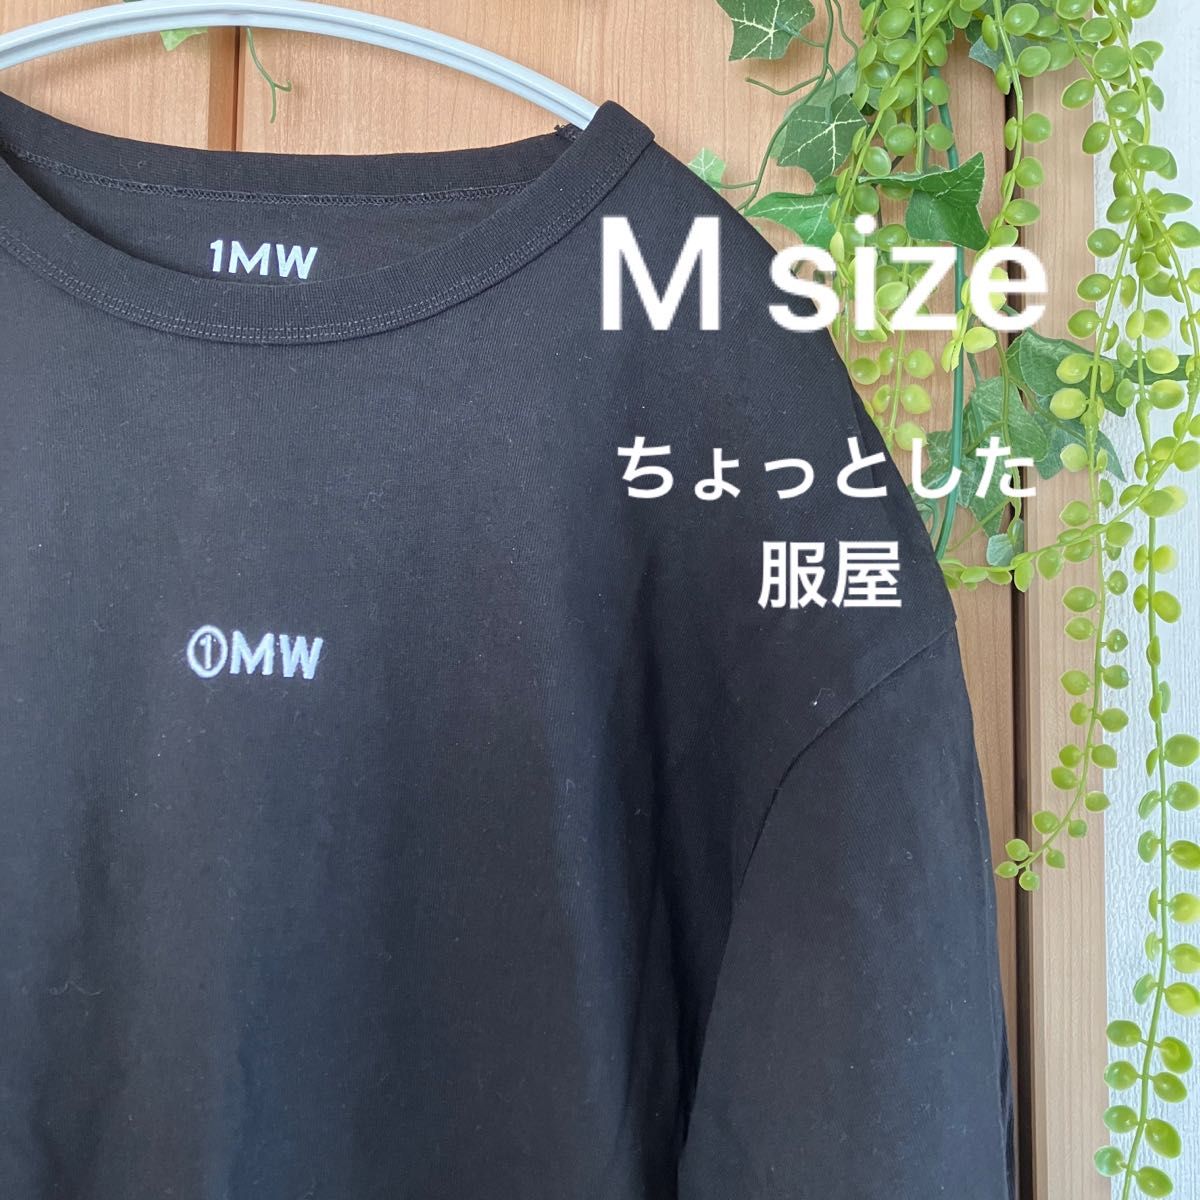 GU 1MW by SOPH. 5分袖 ビッグTシャツ M size